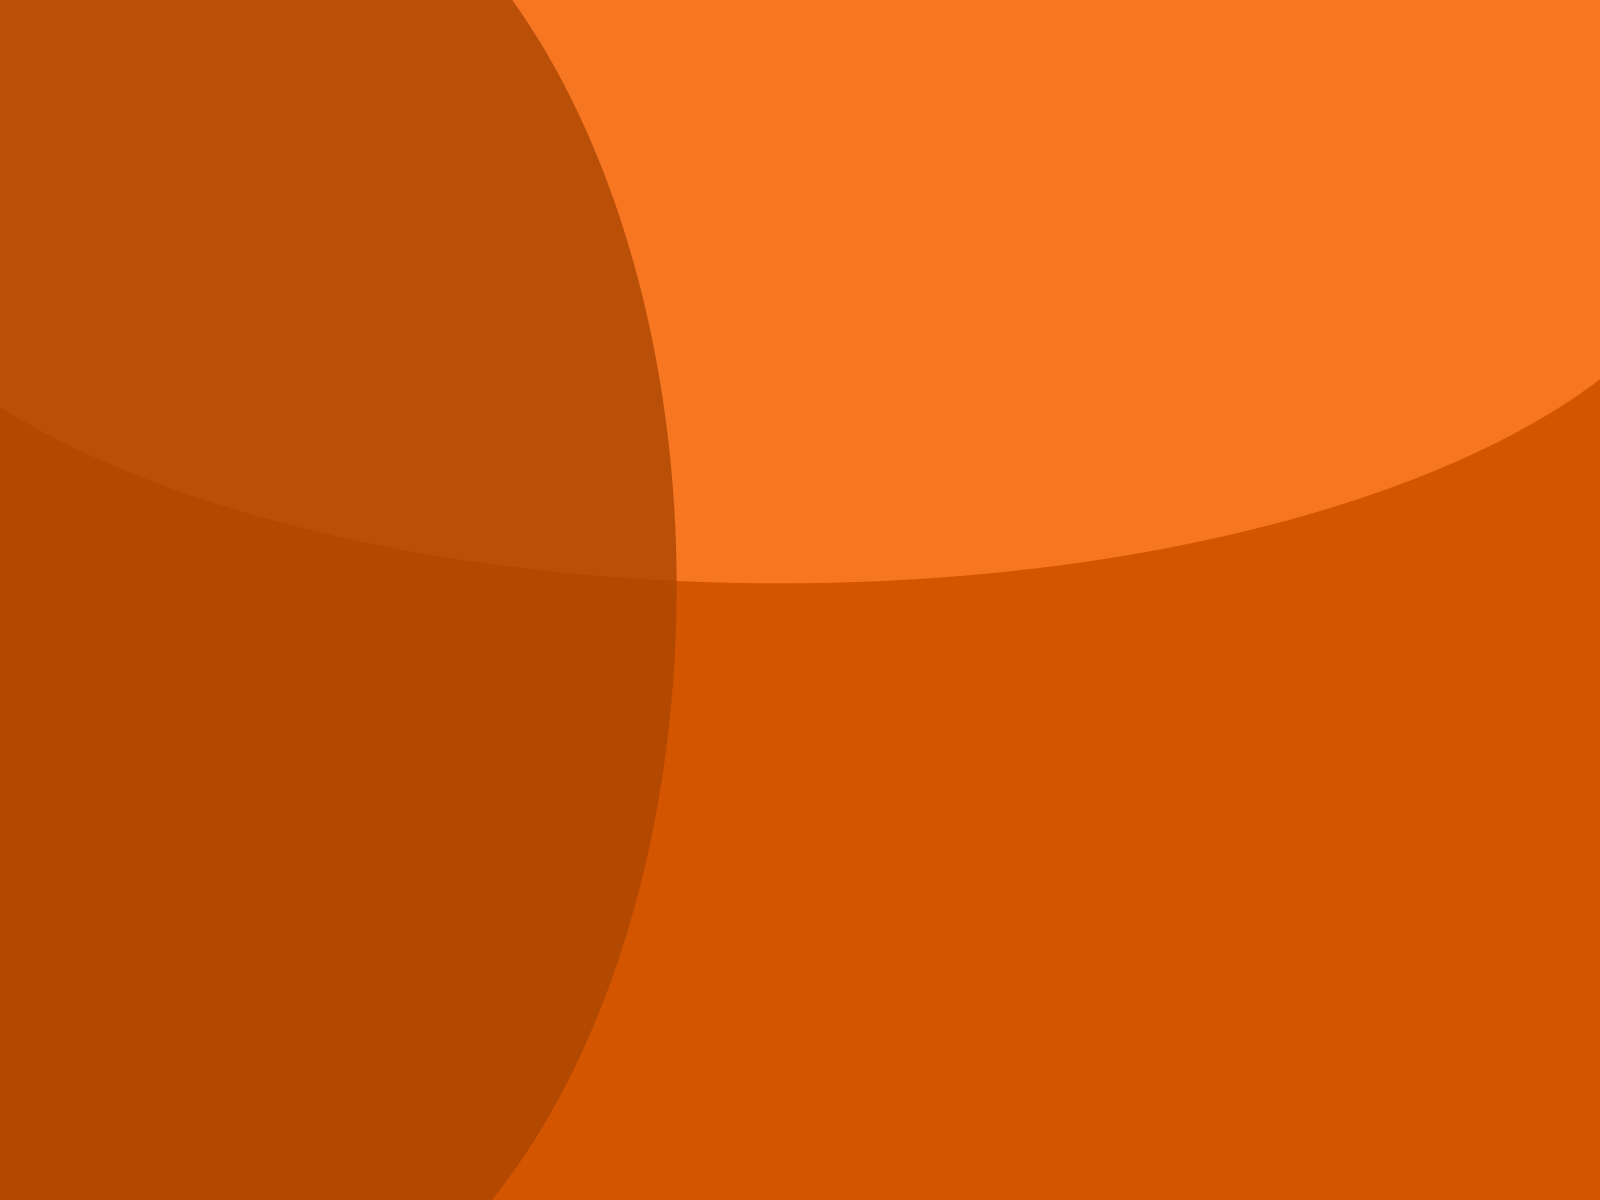 Download File:Ubuntu alternative background.svg - Wikimedia Commons